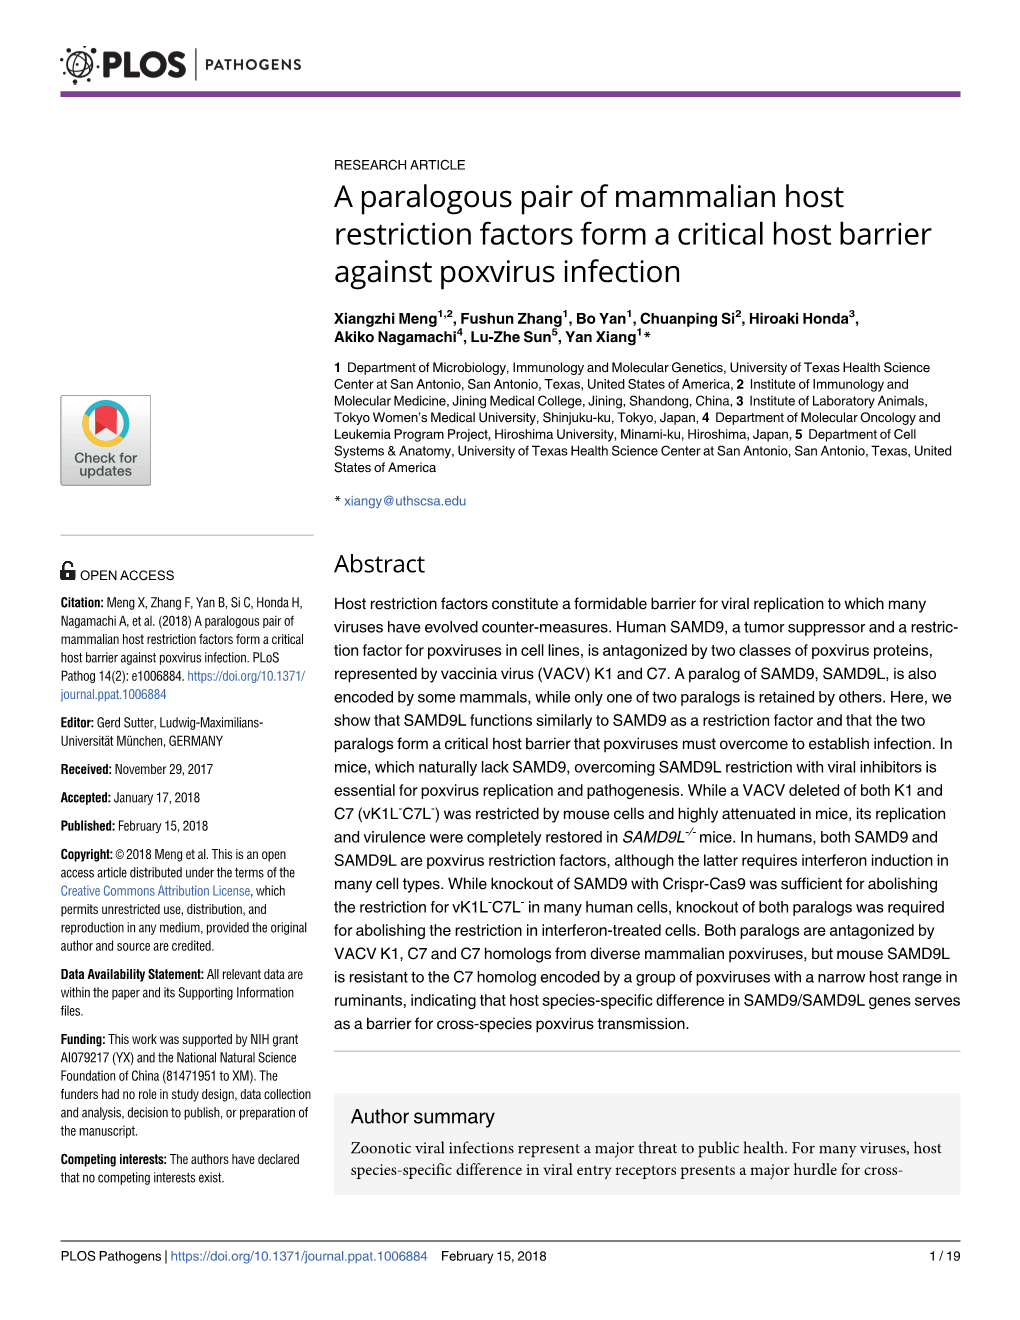 A Paralogous Pair of Mammalian Host Restriction Factors Form a Critical Host Barrier Against Poxvirus Infection